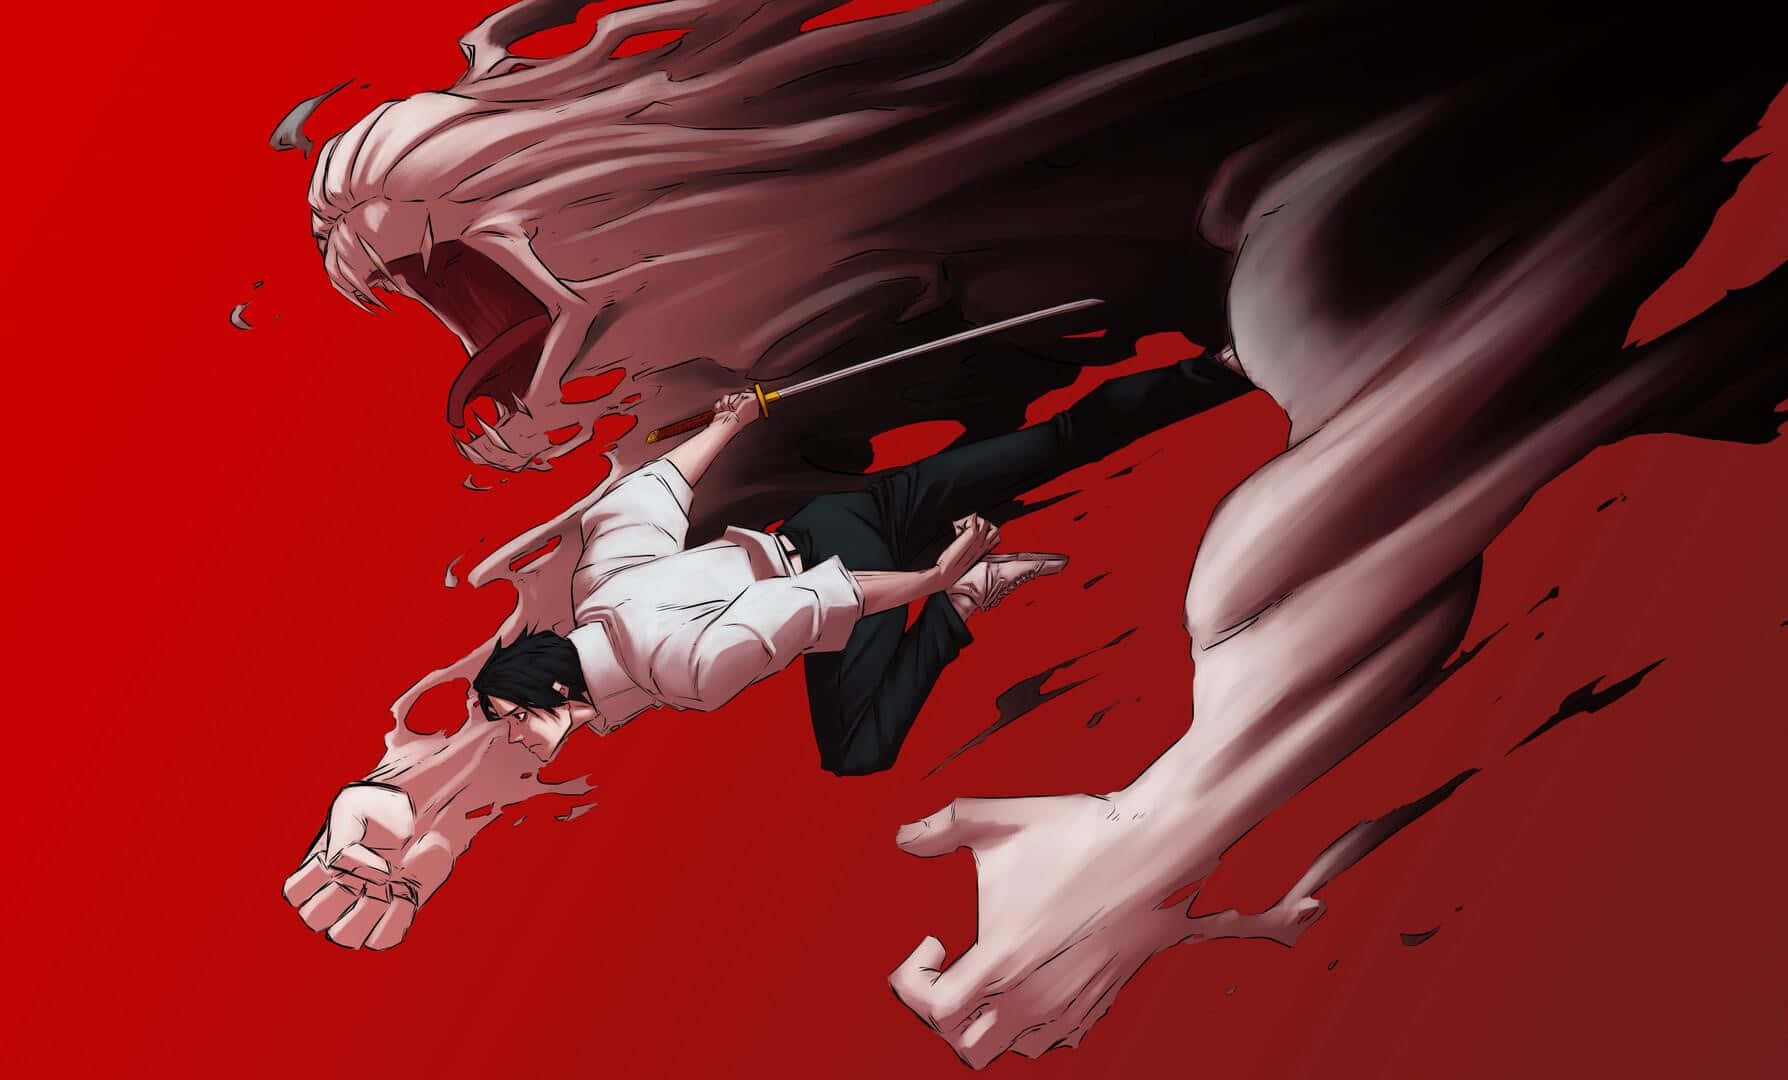 Anime Battle Against Red Backdrop Wallpaper